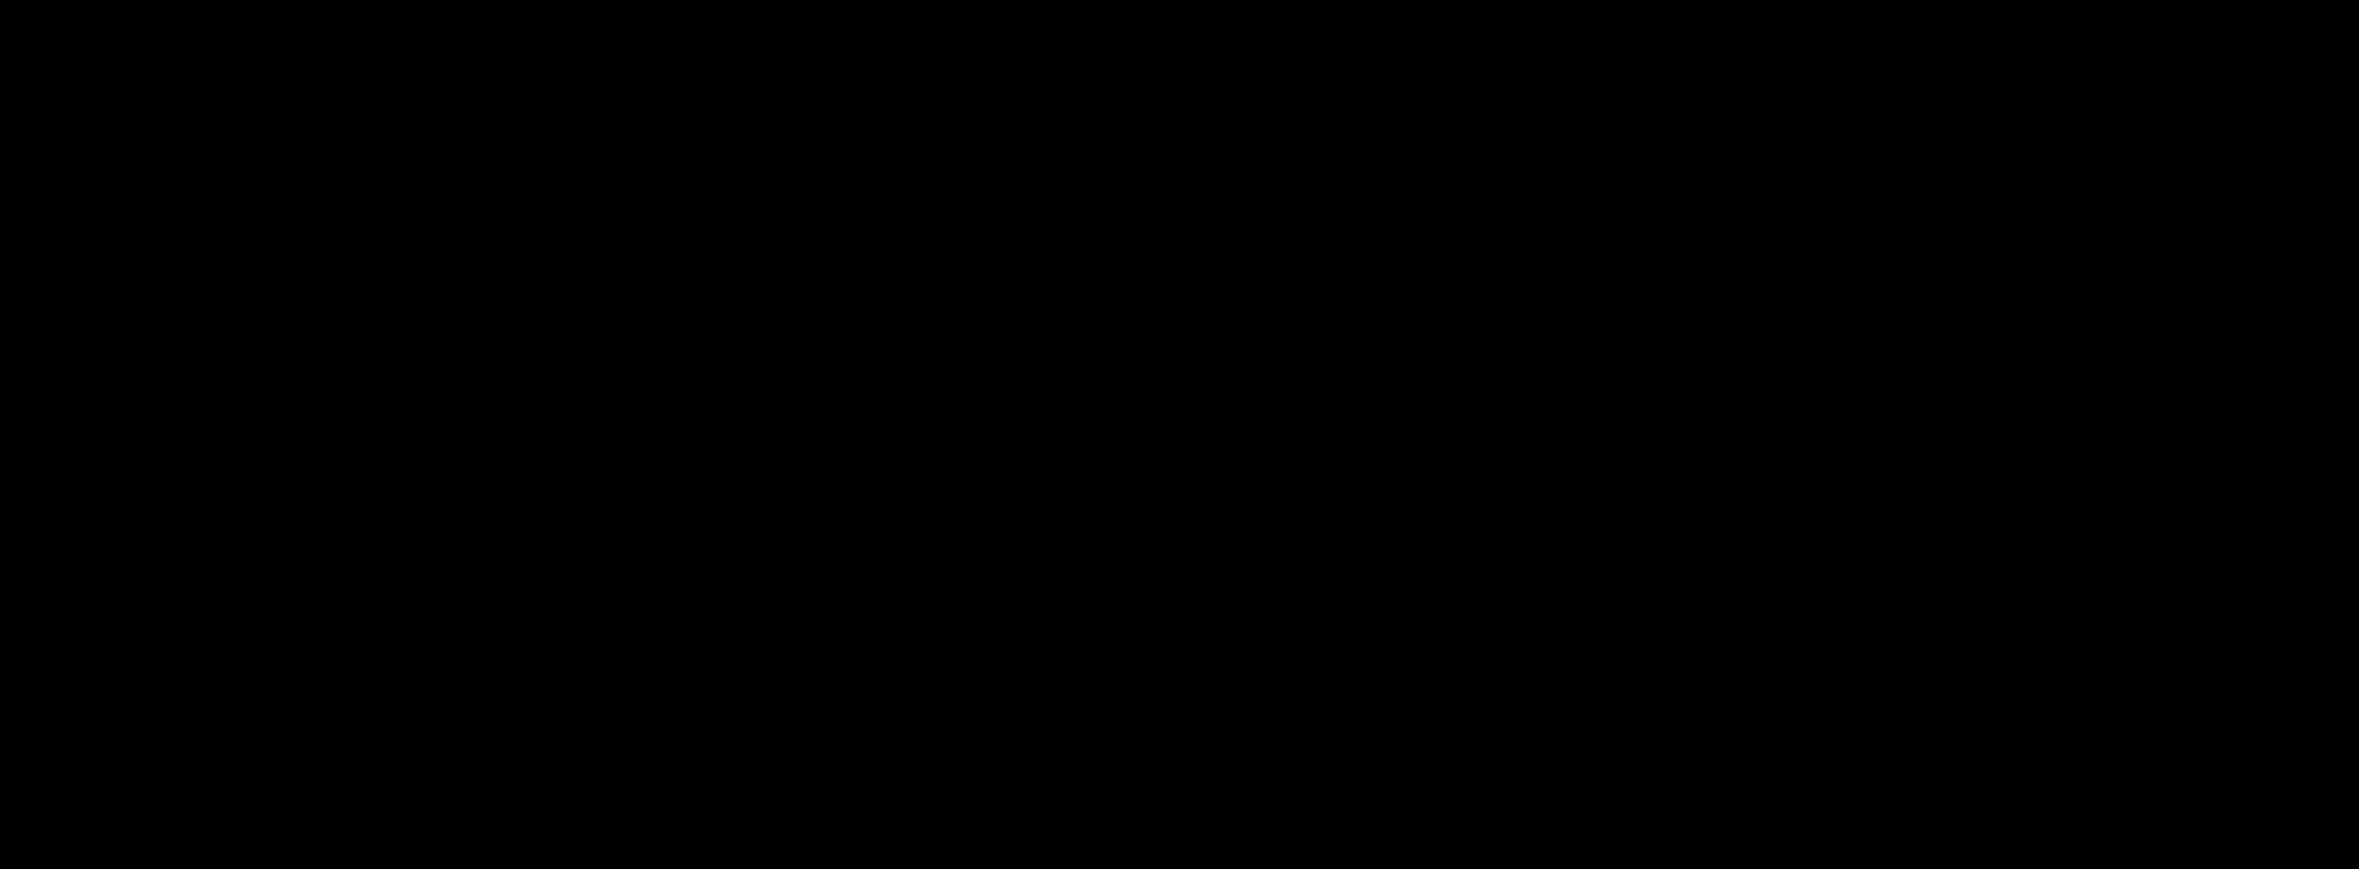 Yankees Logo Black Background PNG